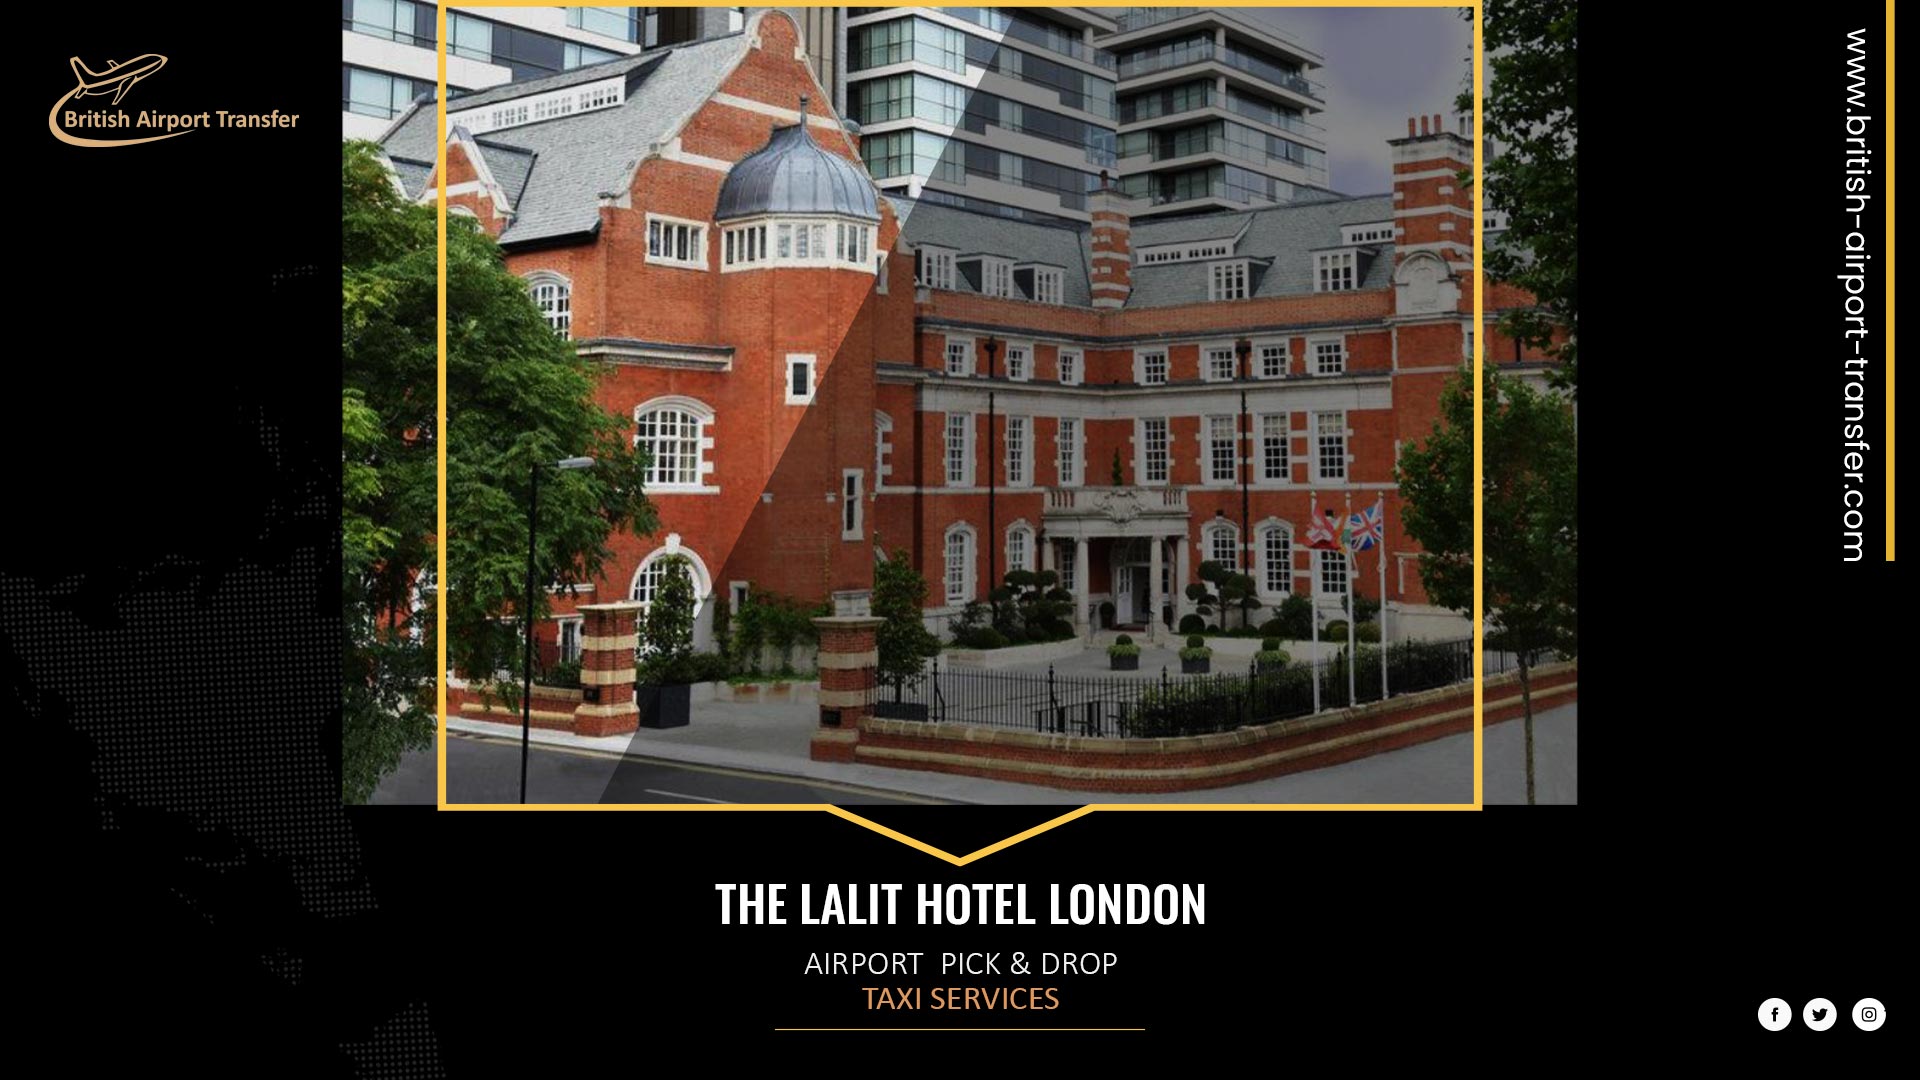 Taxi Cab – The Lalit Hotel London / SE1 2JR